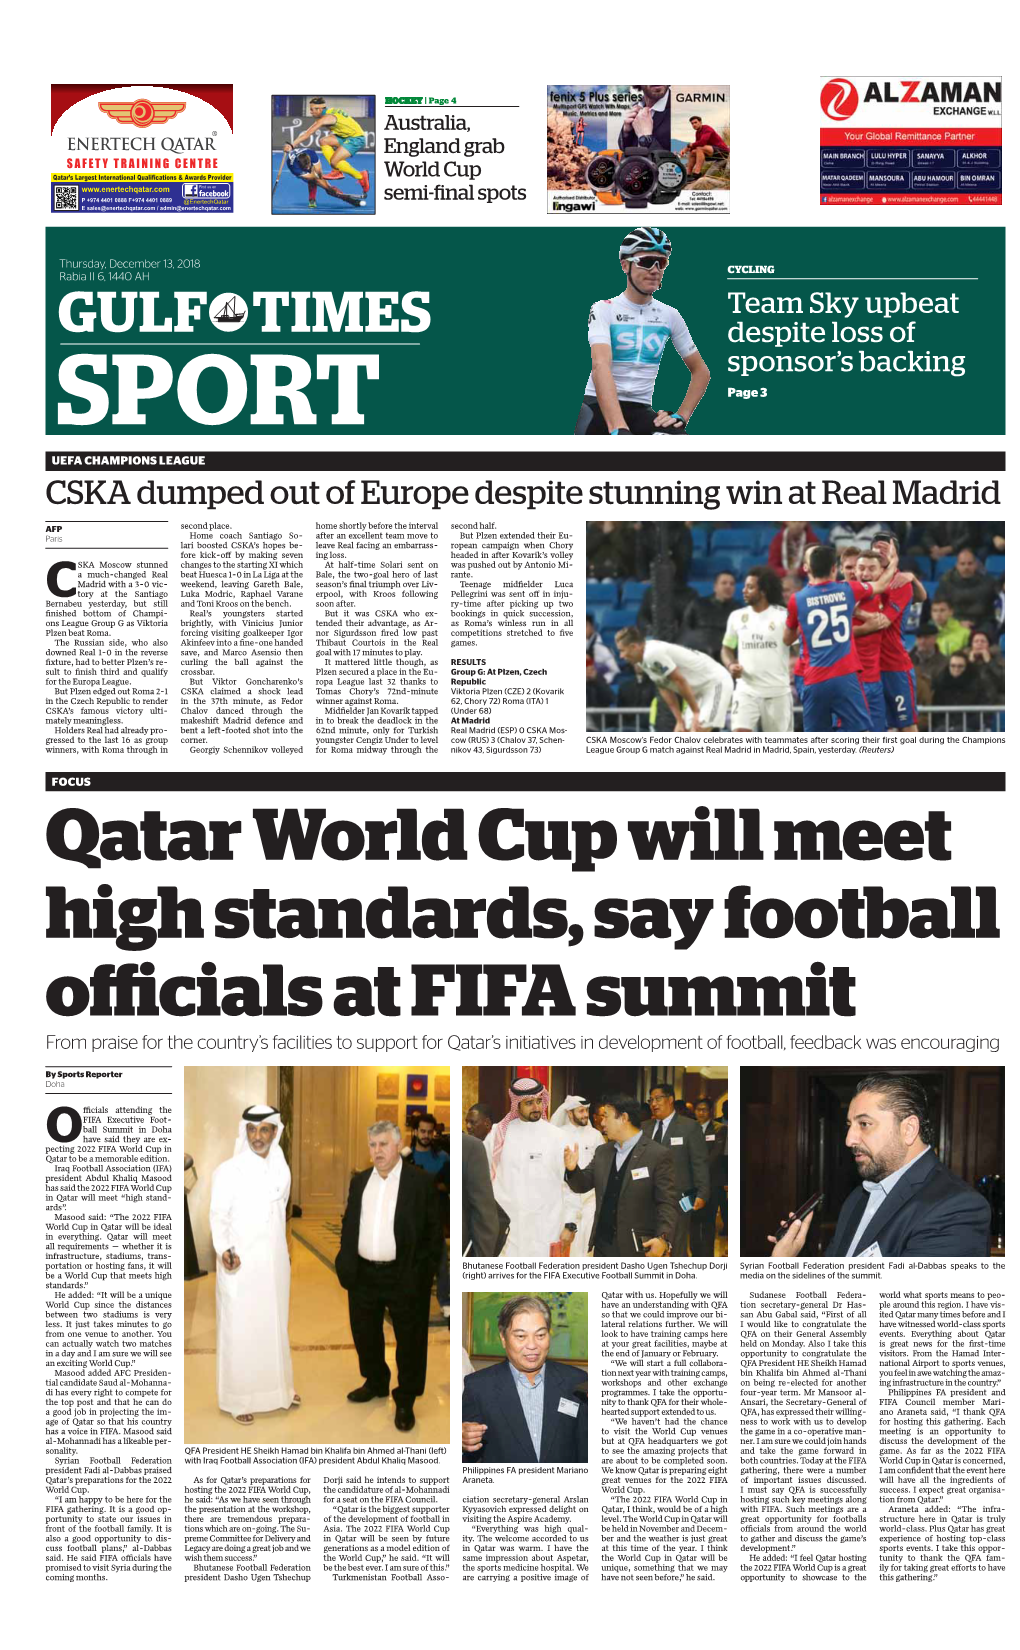 Qatar World Cup Will Meet High Standards, Say